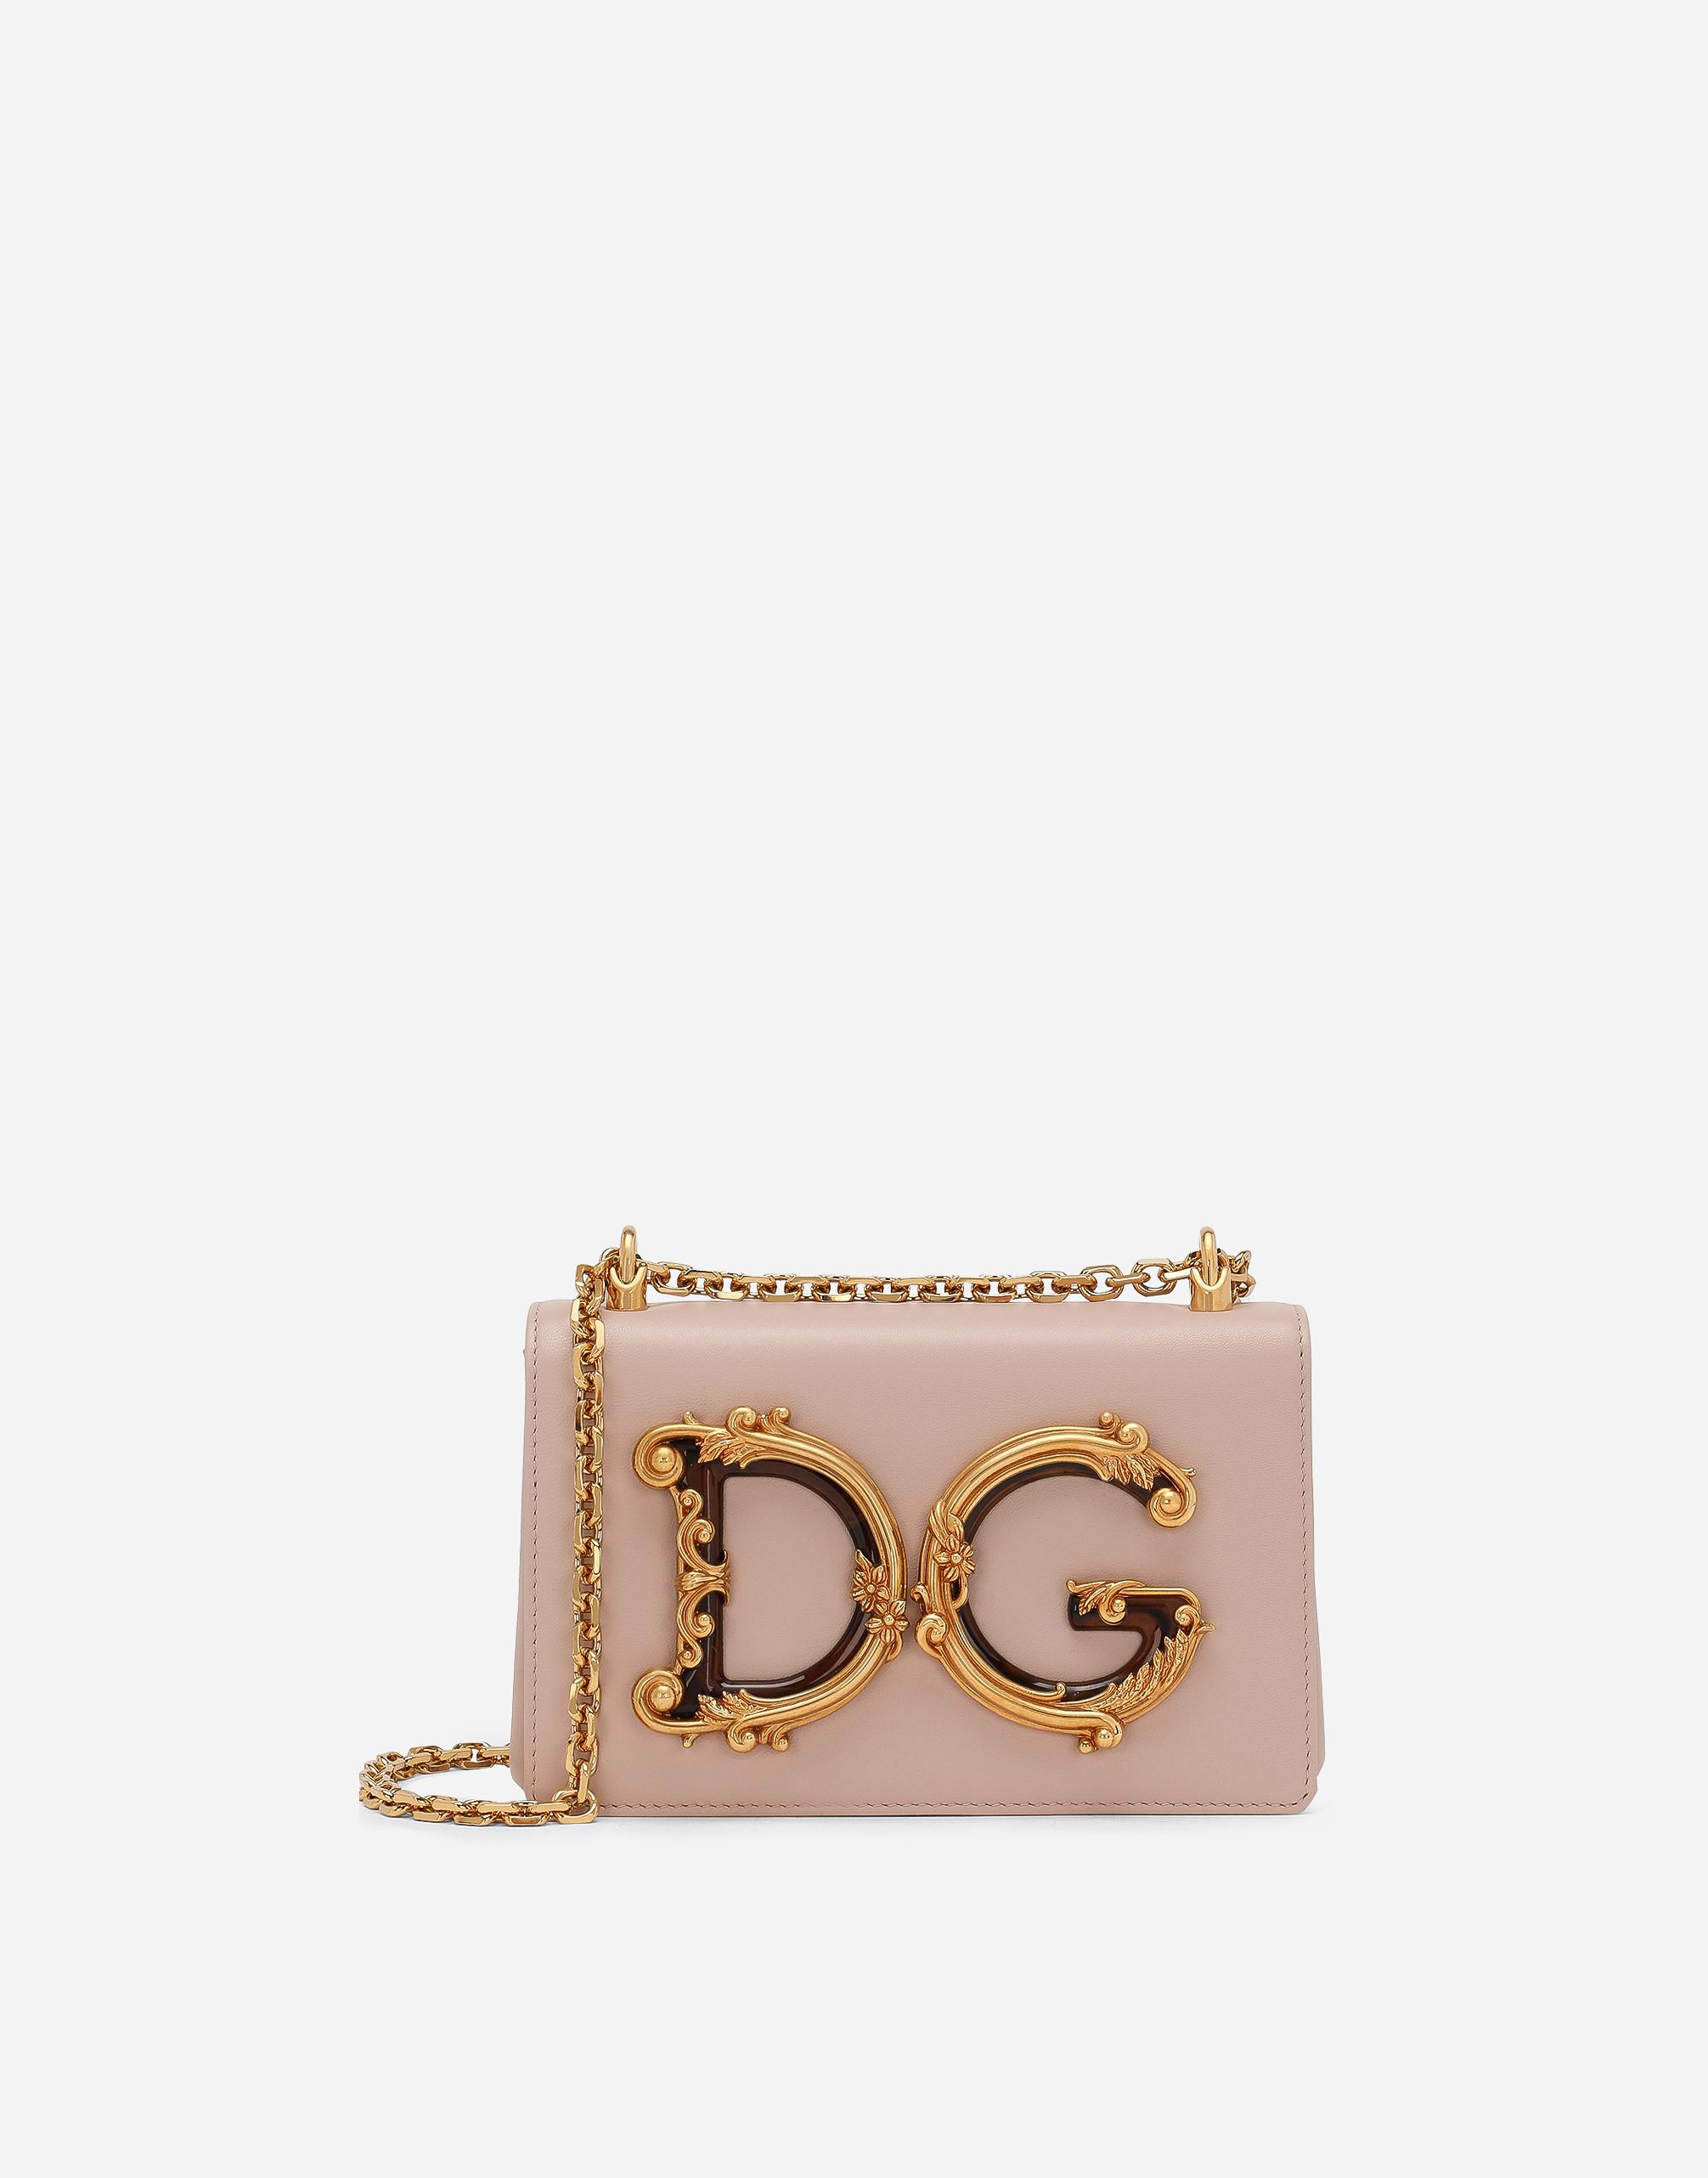 DG Girls shoulder bag in nappa leather in Pale Pink